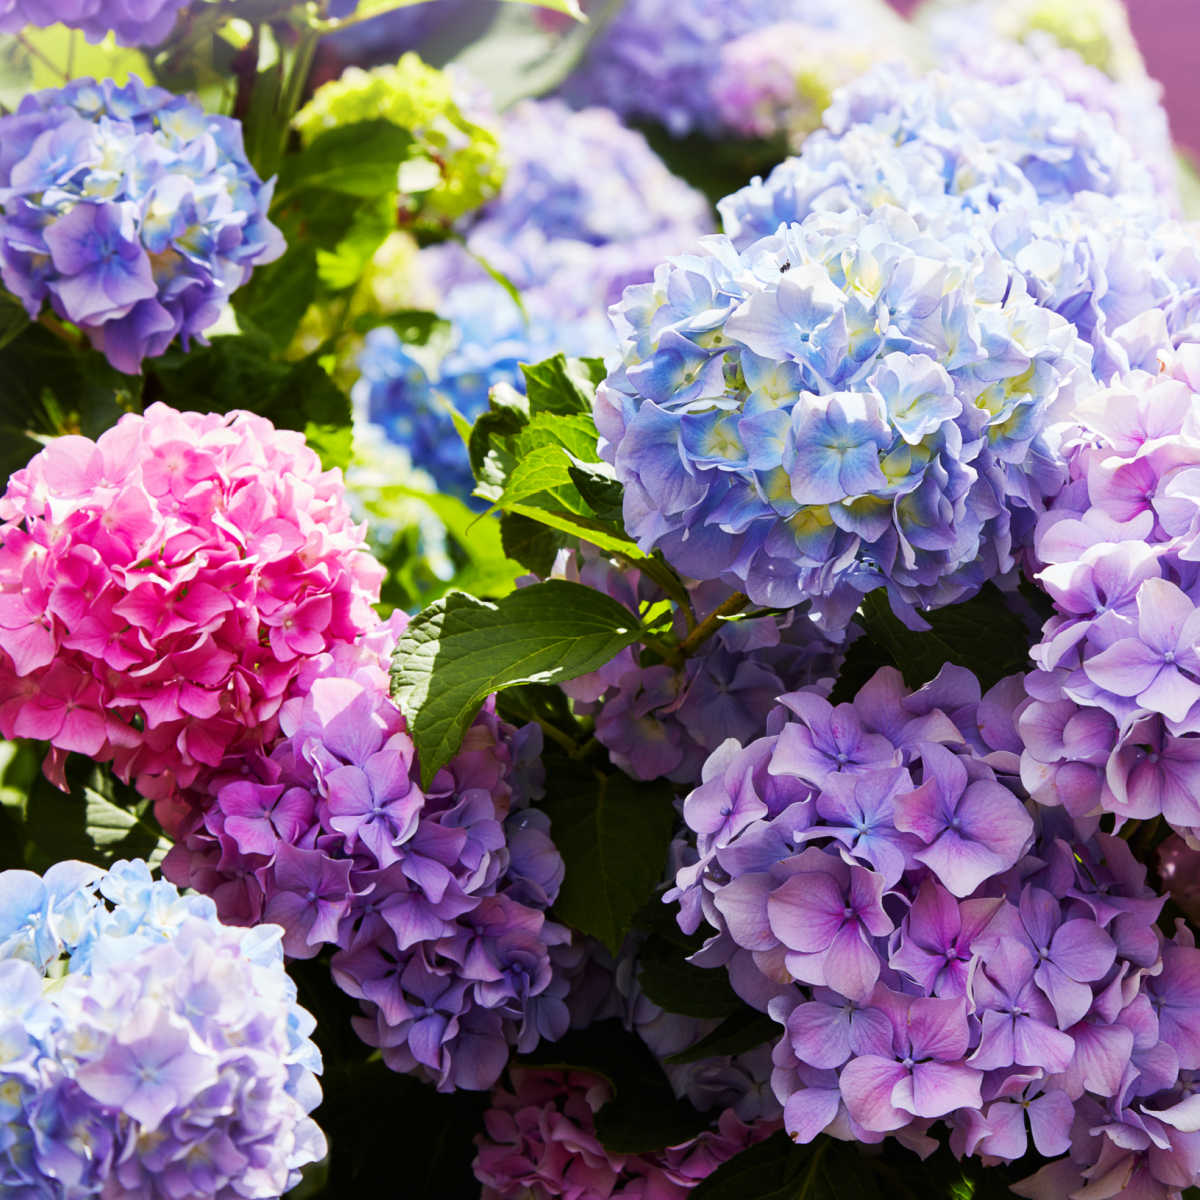 Blue, pink and purple hydrangea flowers.